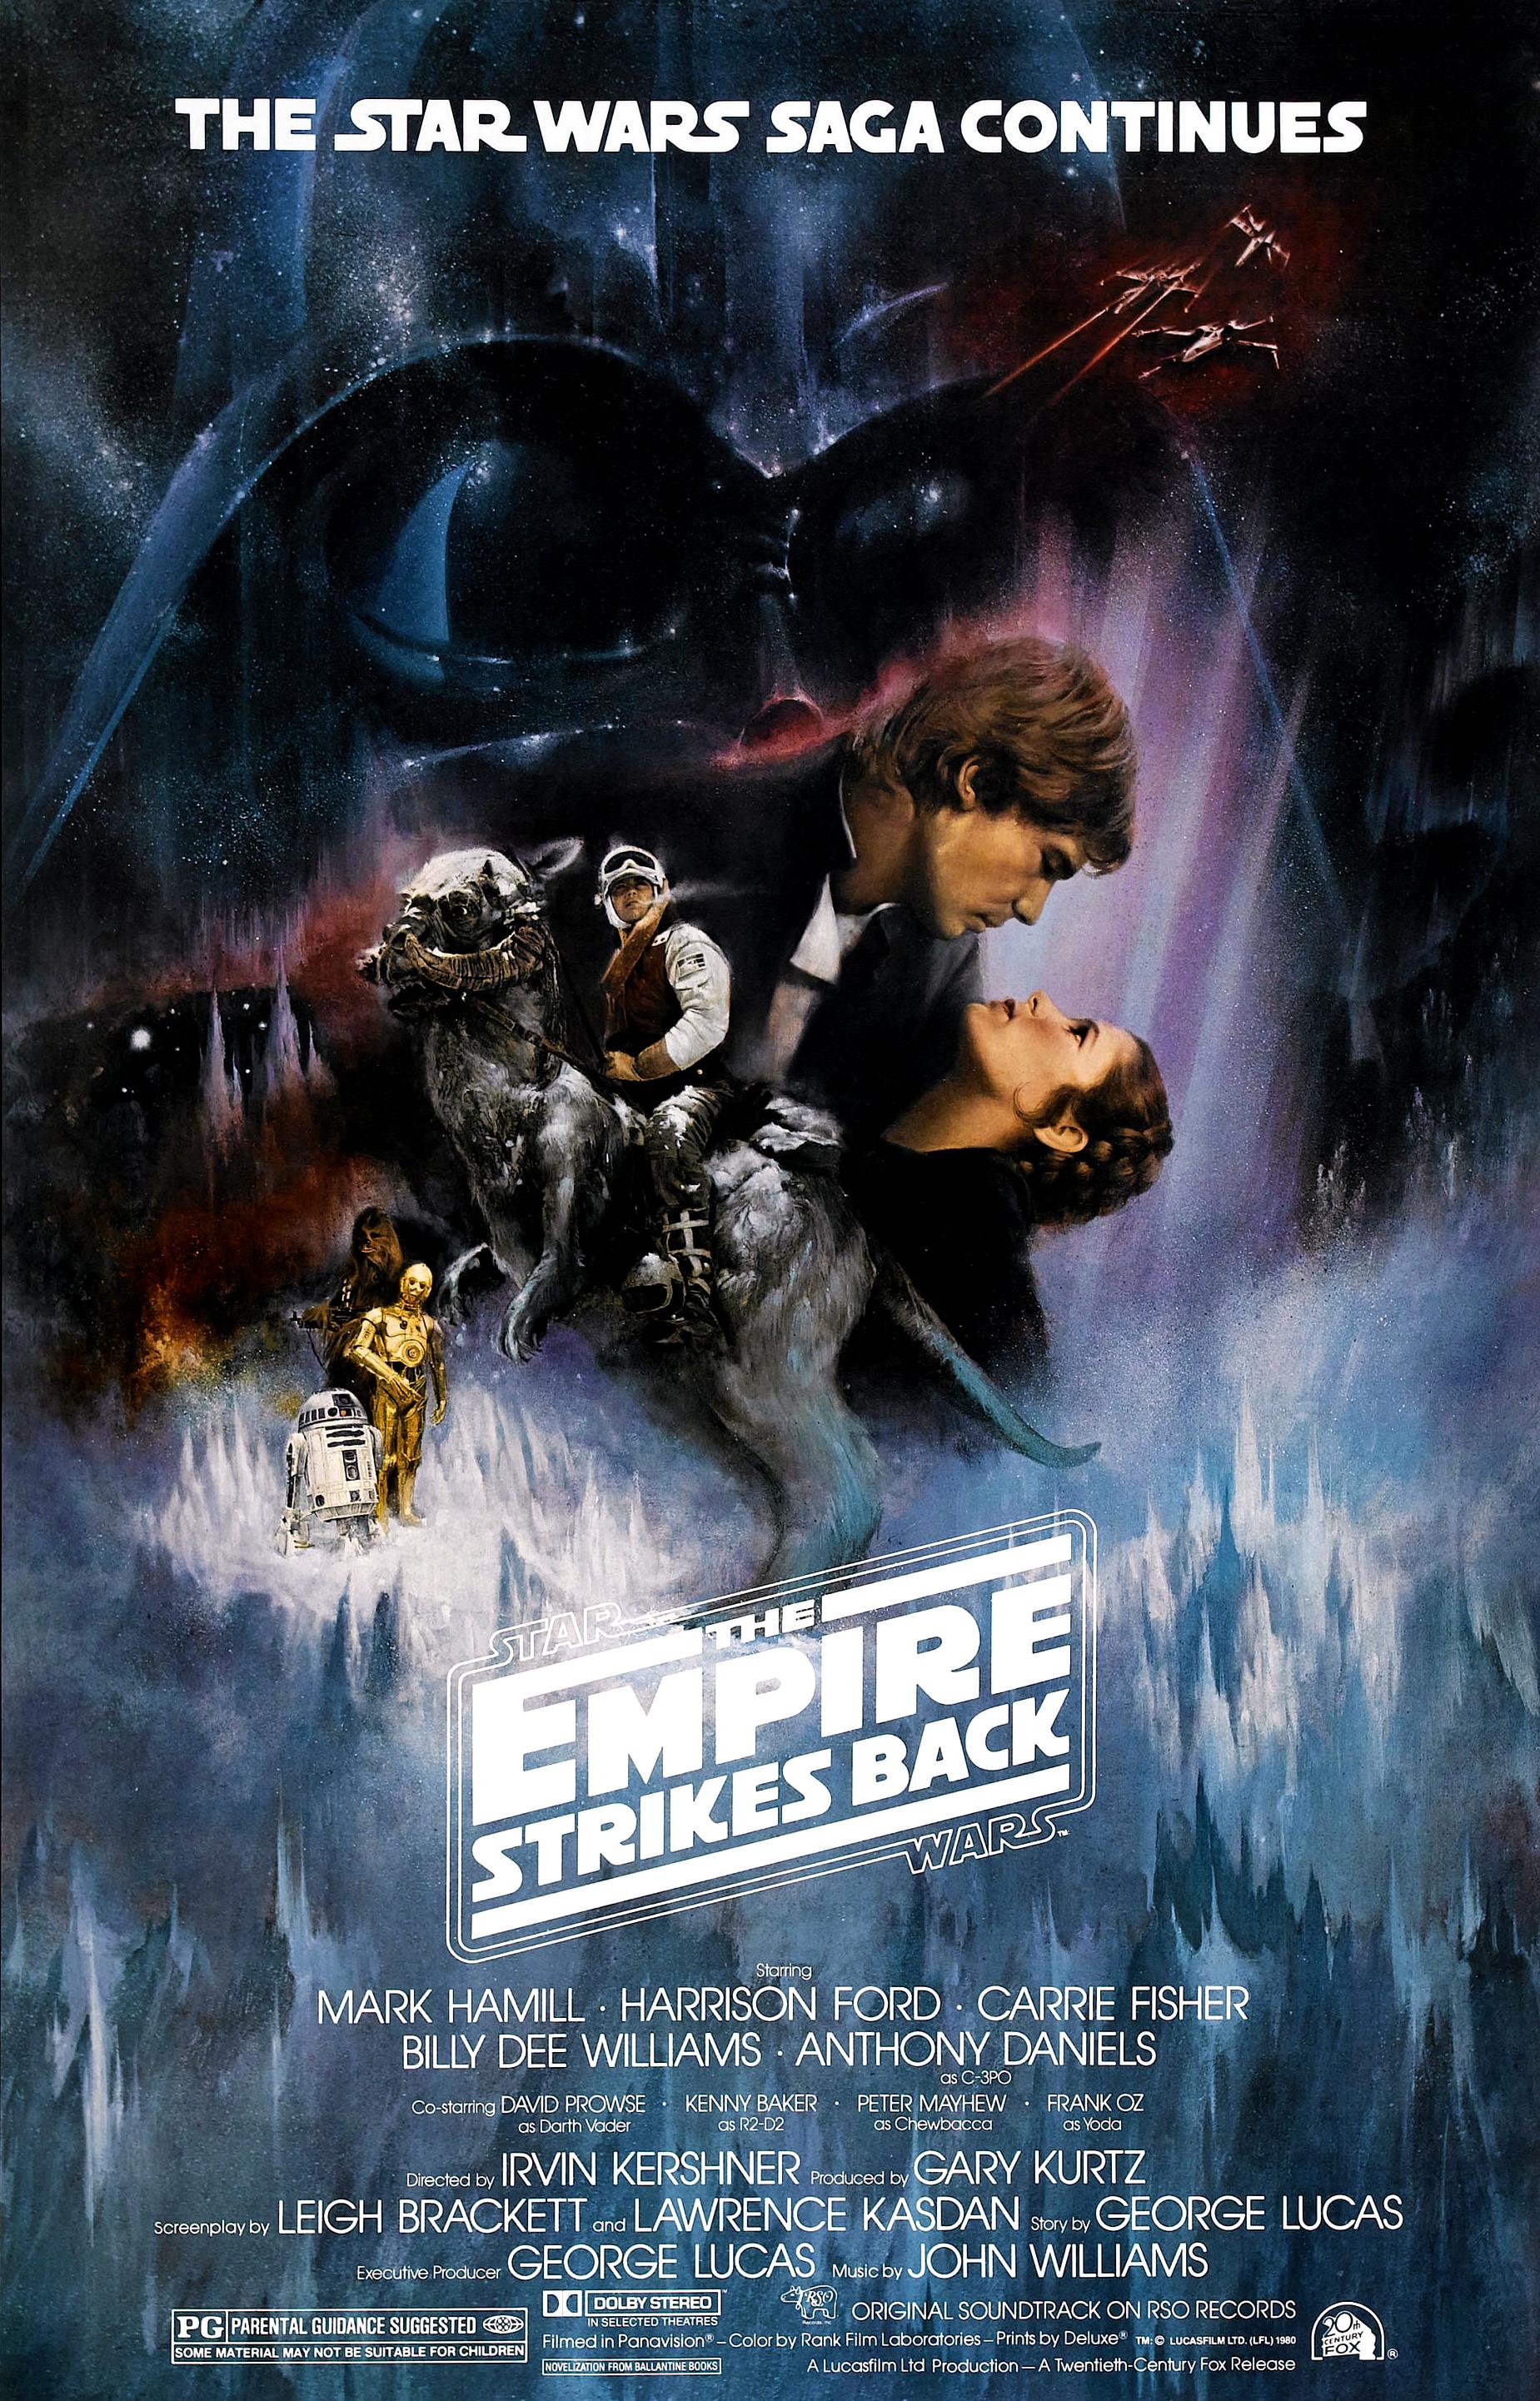 Star Wars Episode V The Empire Strikes Back 1980 Moria